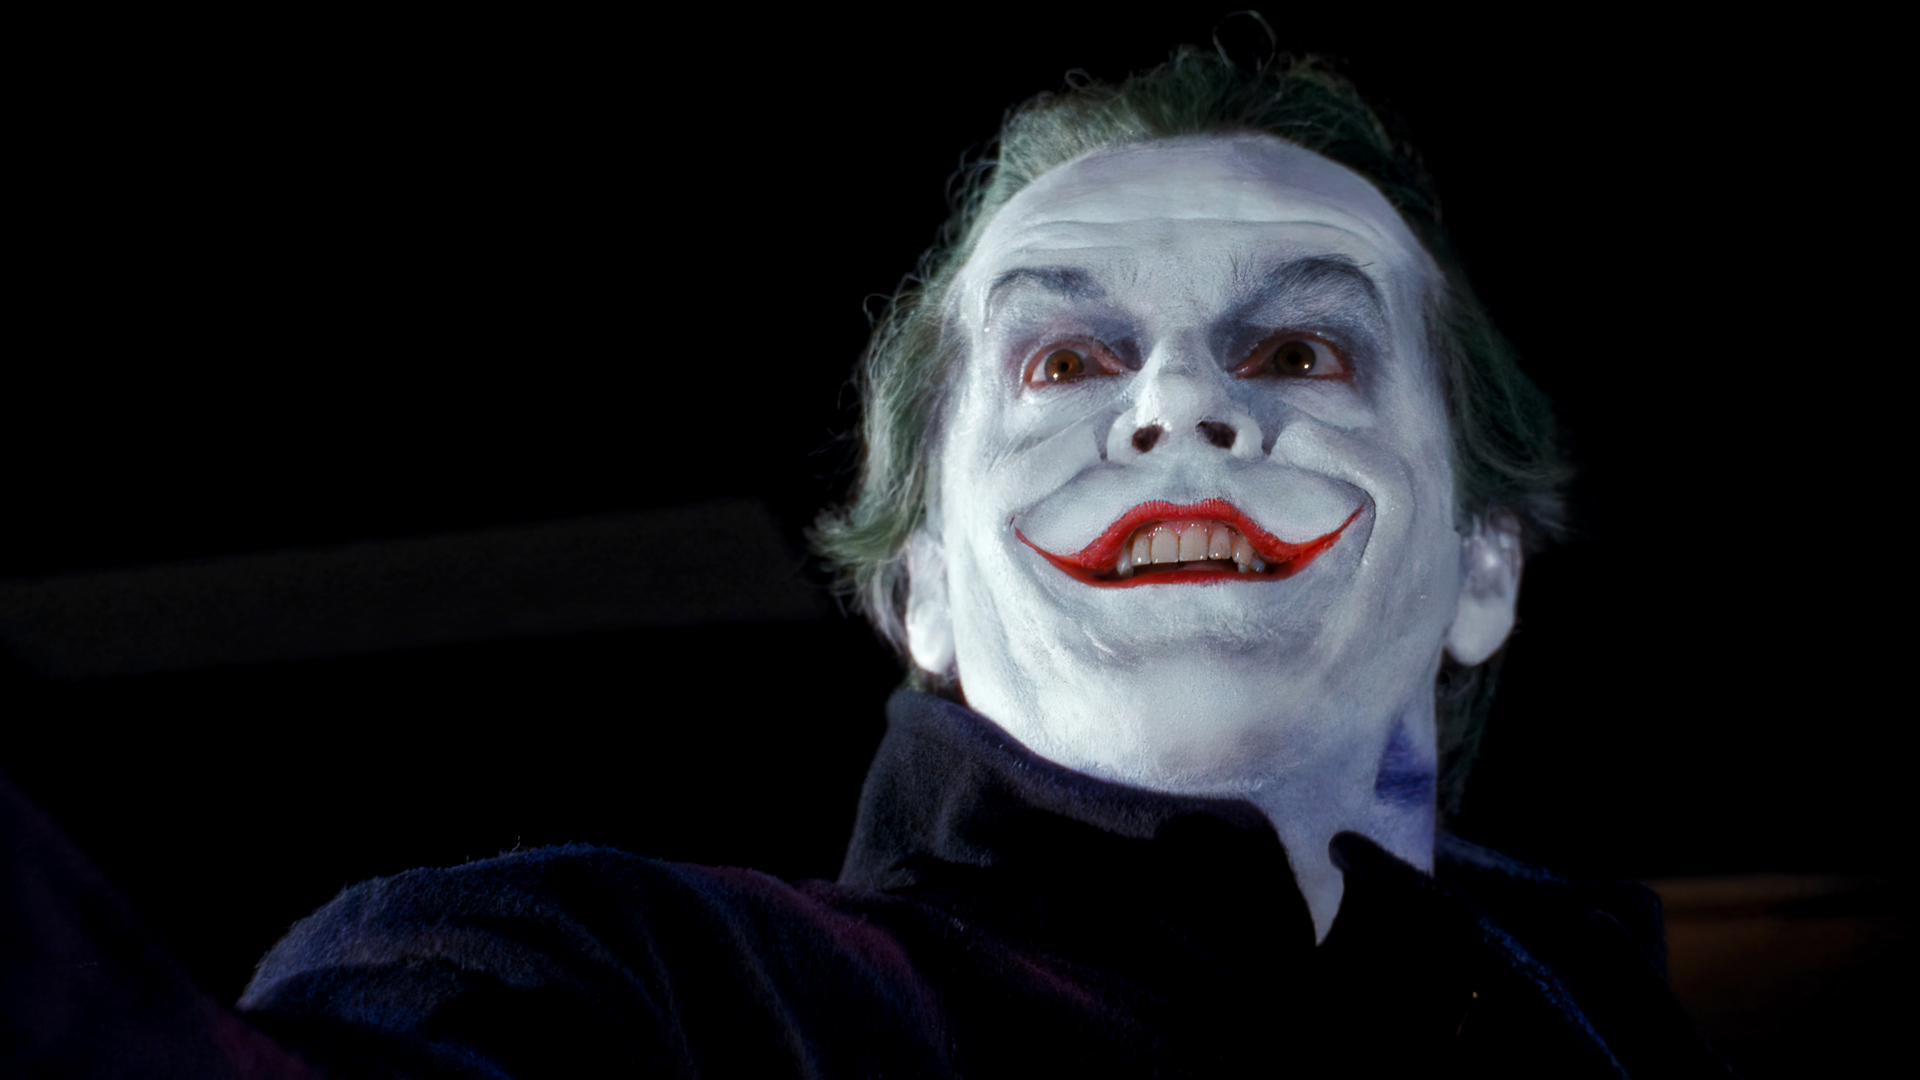 People 1920x1080 Batman (1989) movies film stills Joker Jack Nicholson actor face paint men